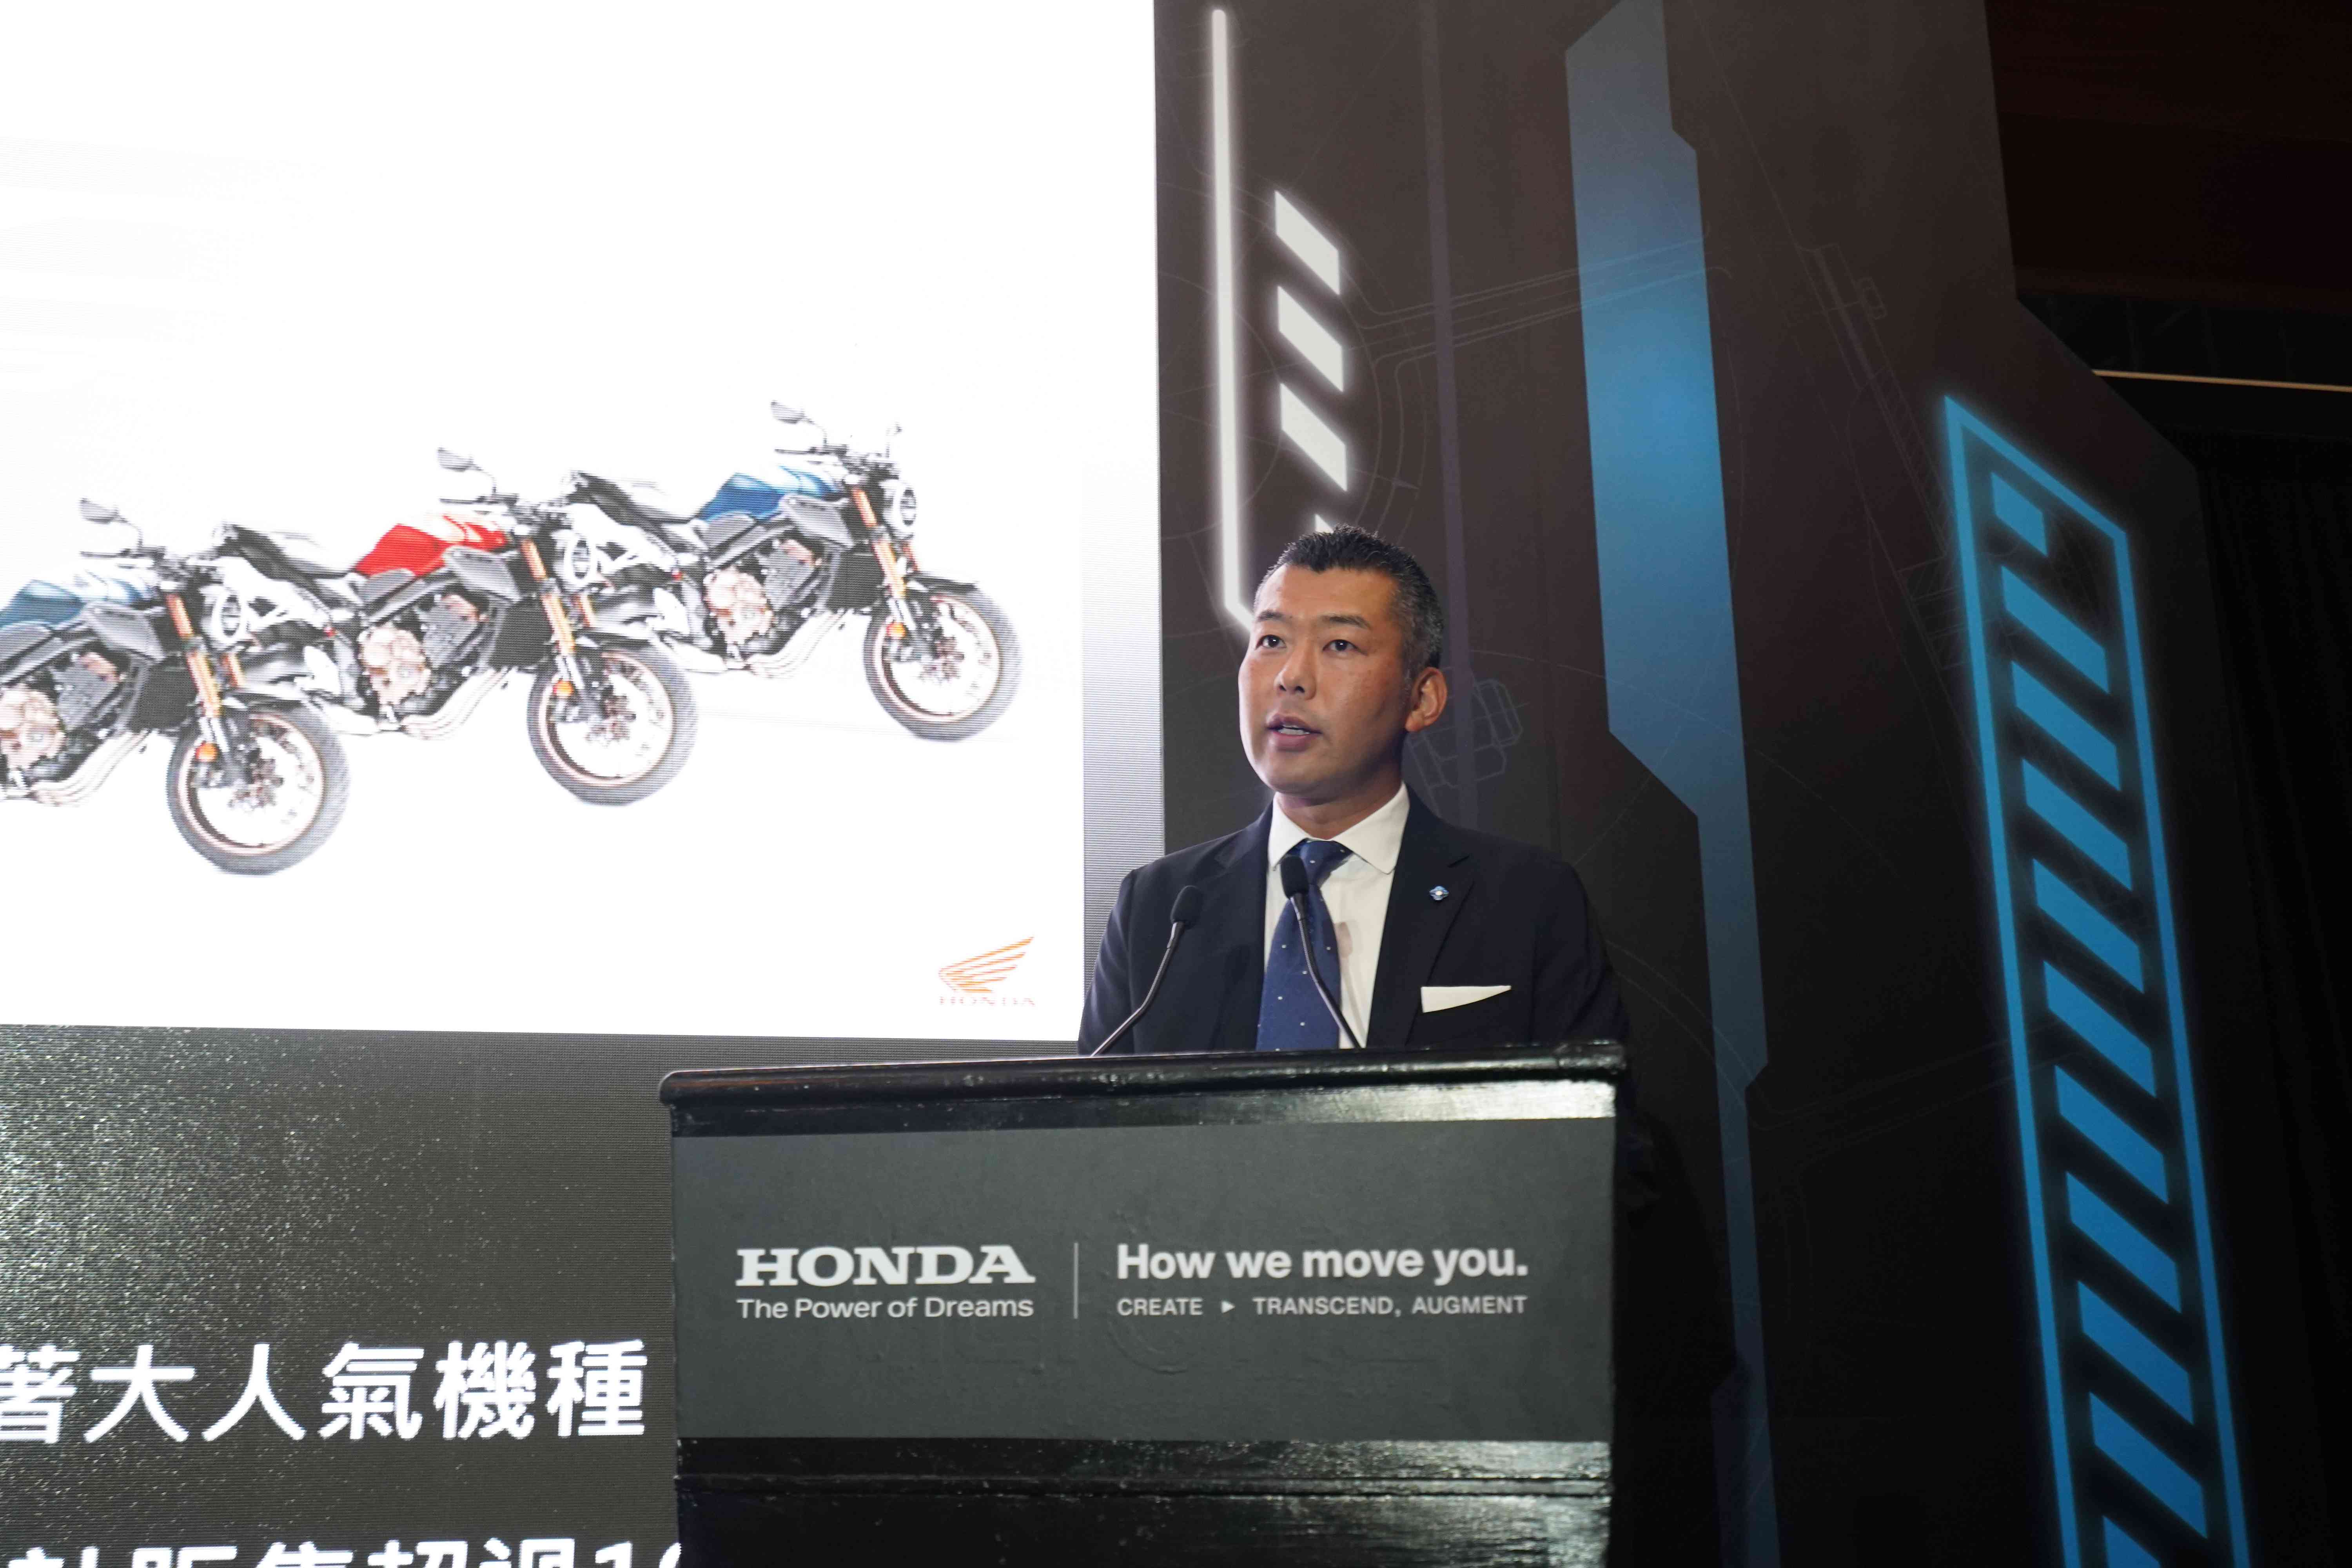 Honda「The Power of Dreams – How we move you.」新定義品牌標語啟用Honda Taiwan三位一體事業 邁向移動新紀元 全方位「拓展生活可能性的喜悅」